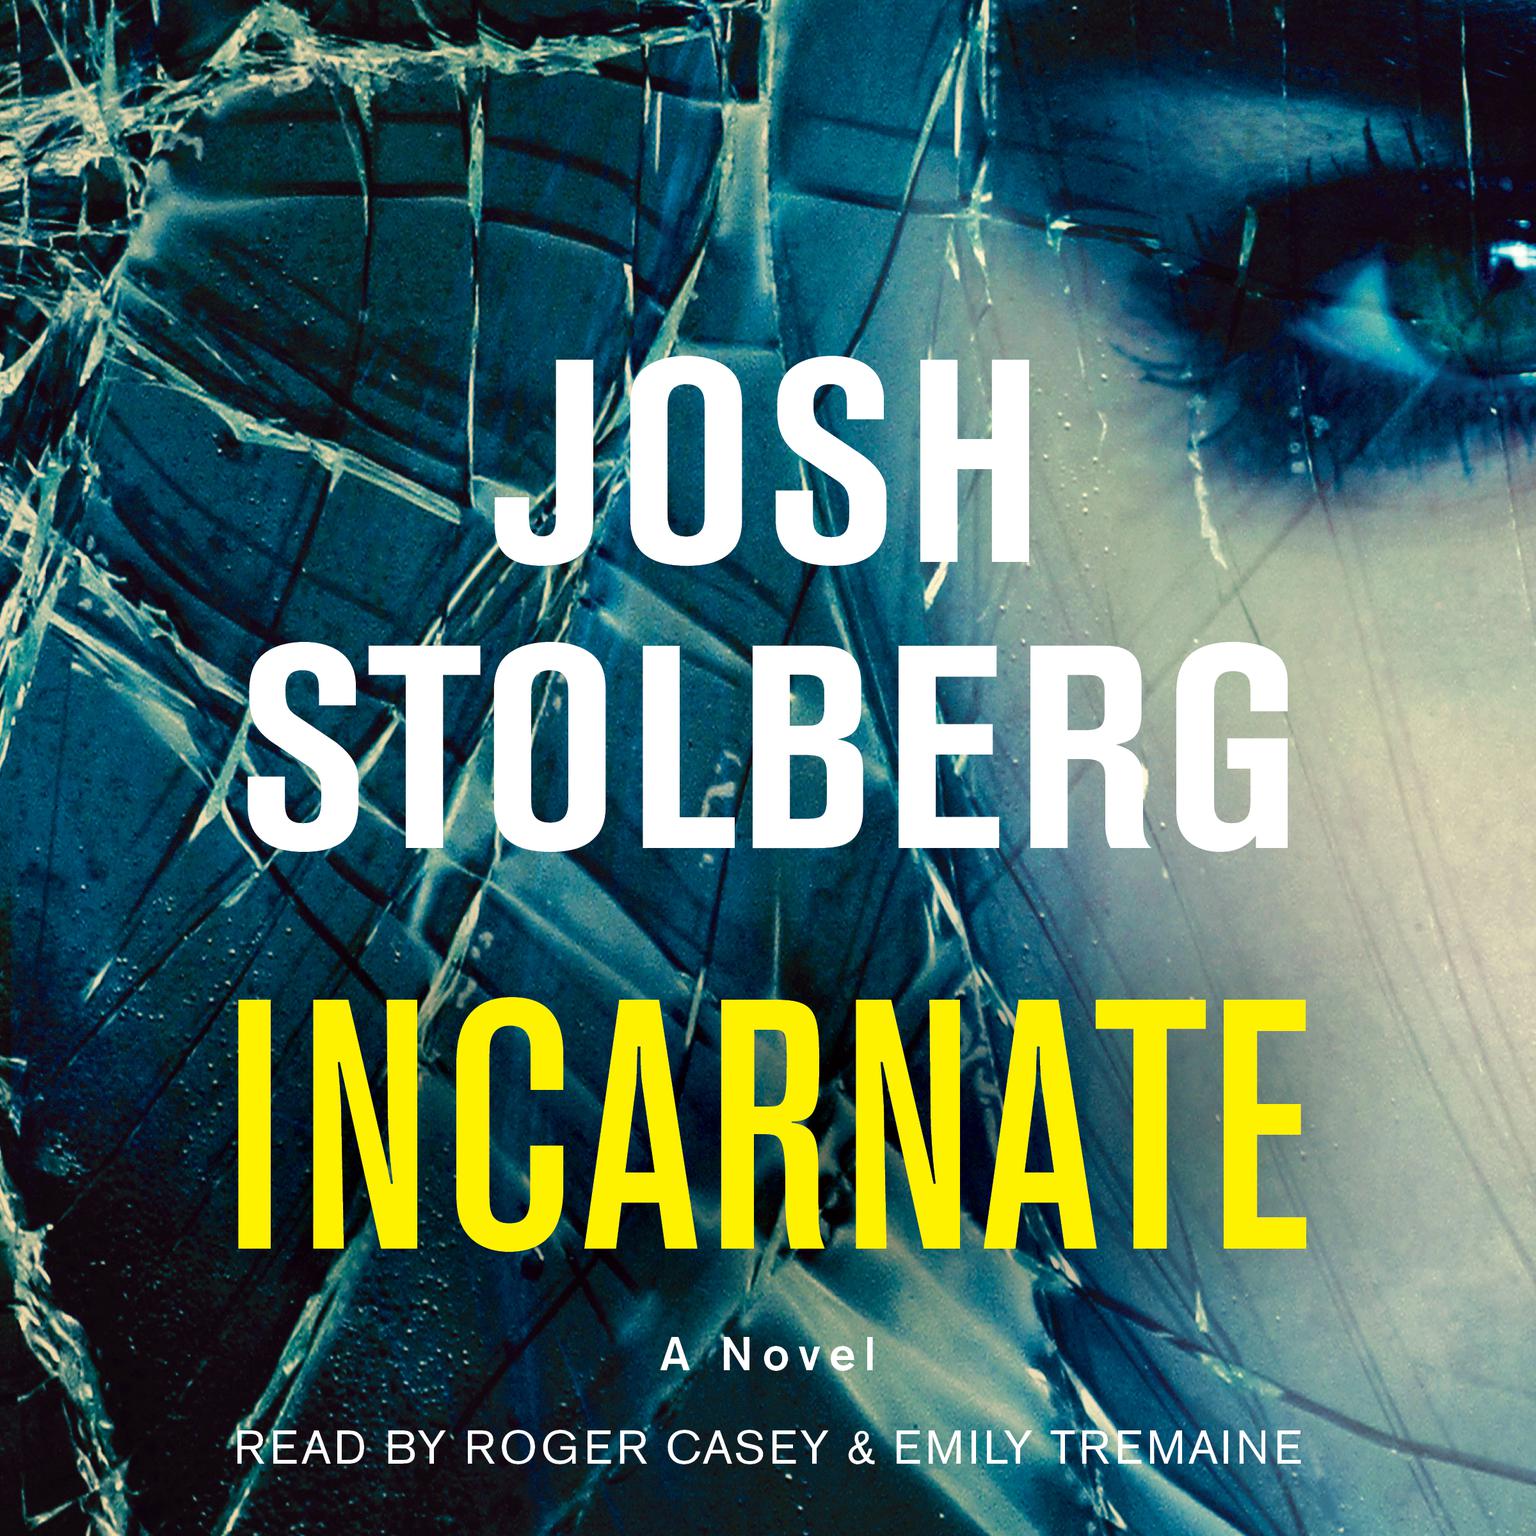 Incarnate: A Novel Audiobook, by Josh Stolberg